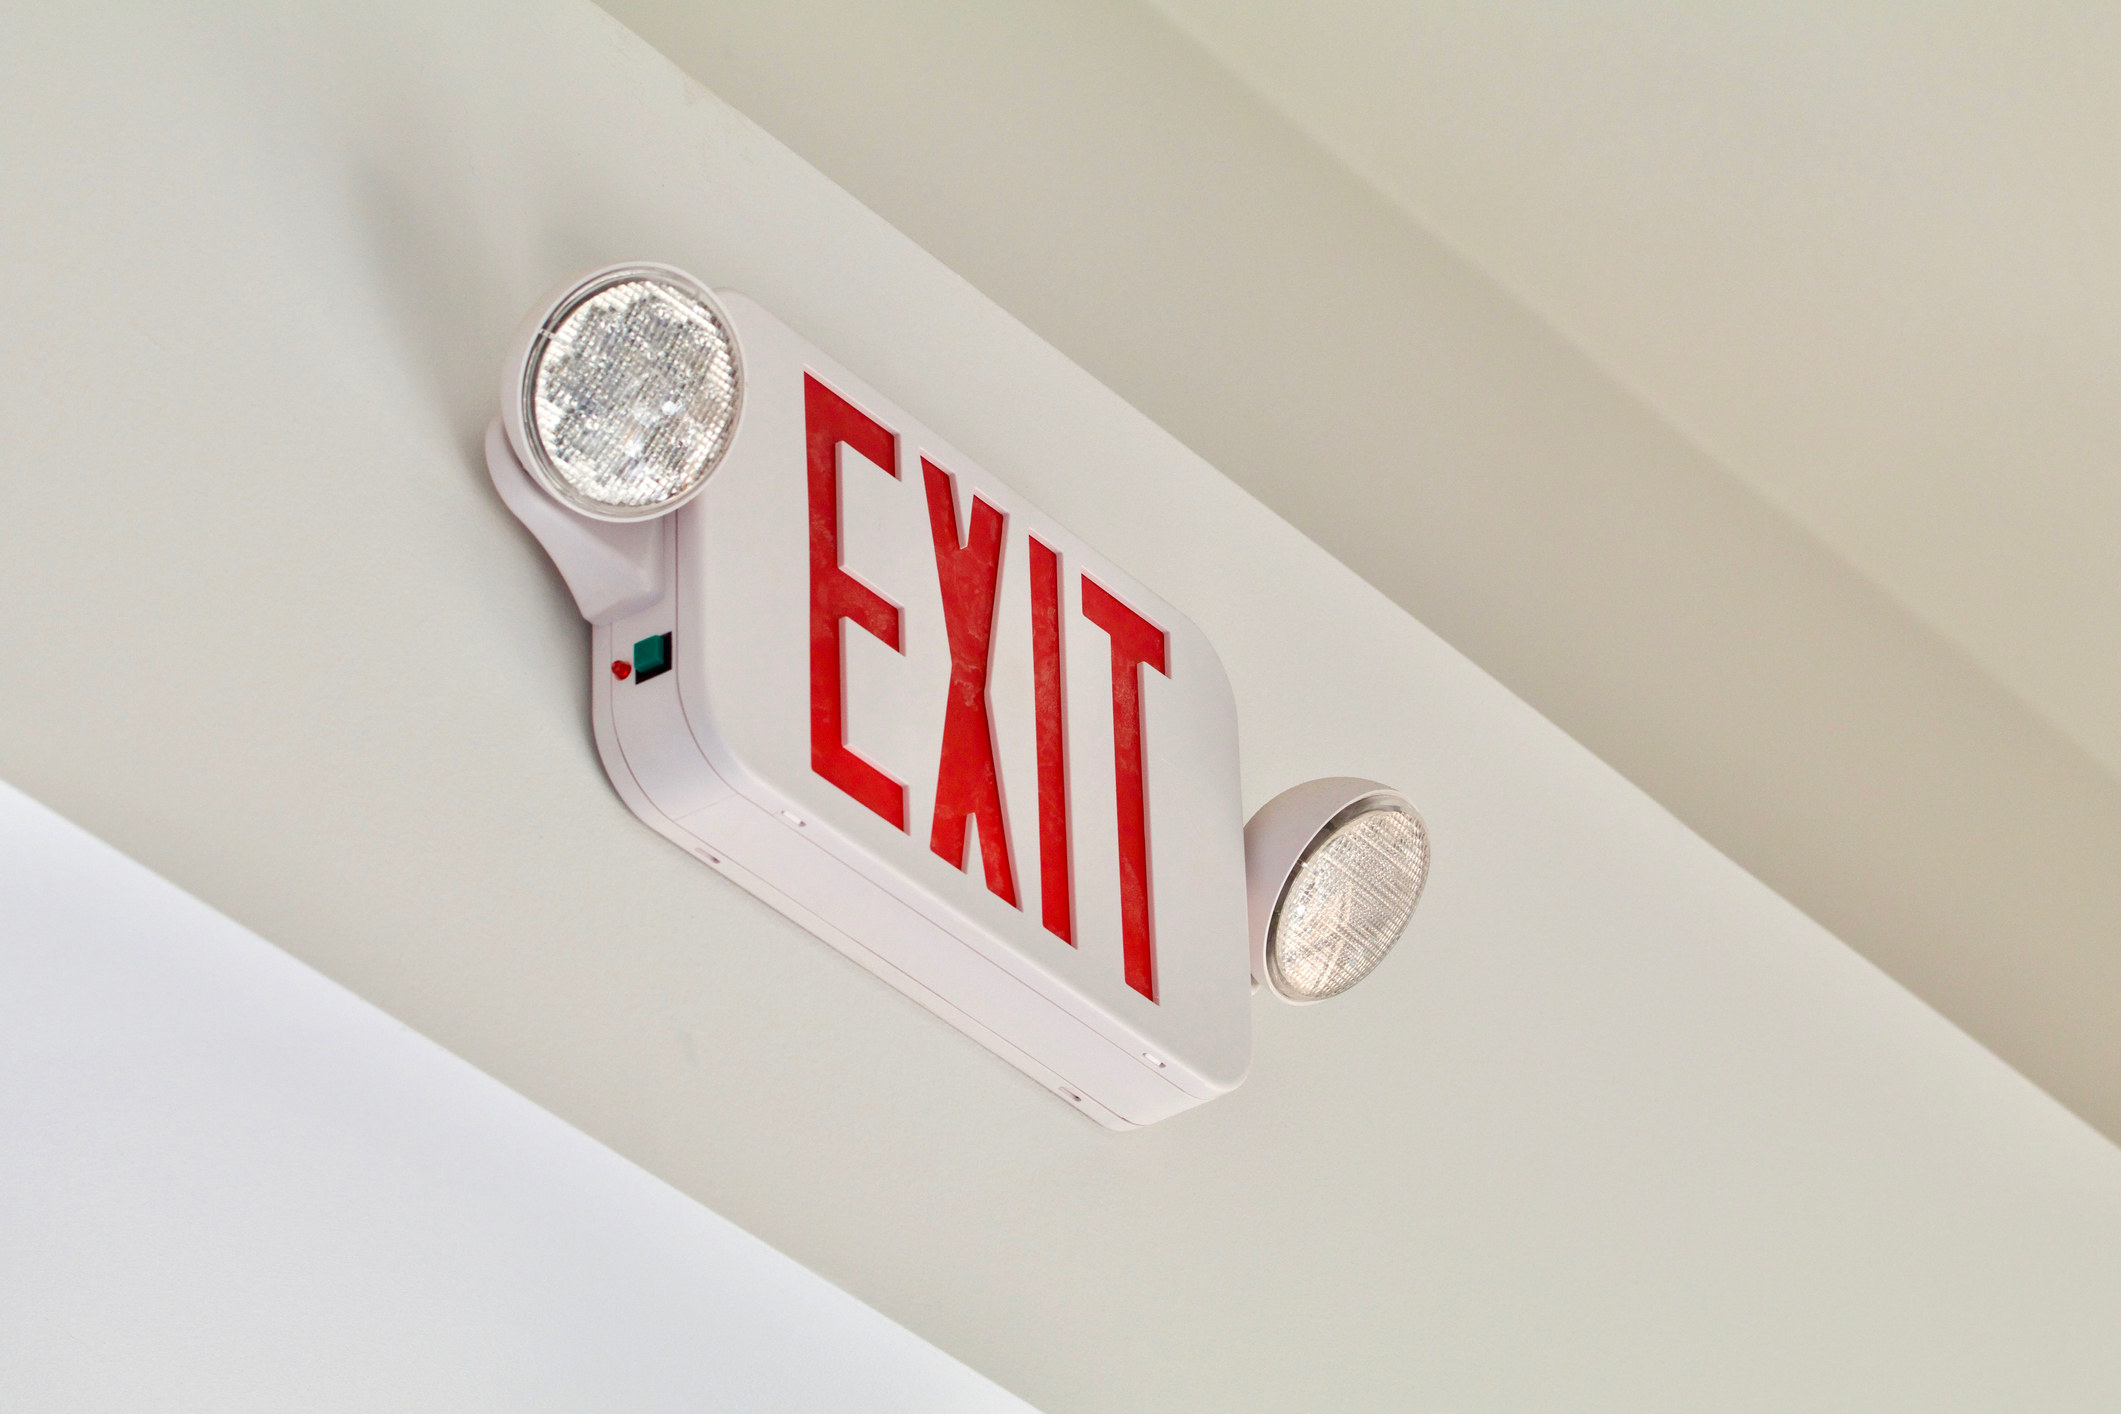 An exit sign above a door